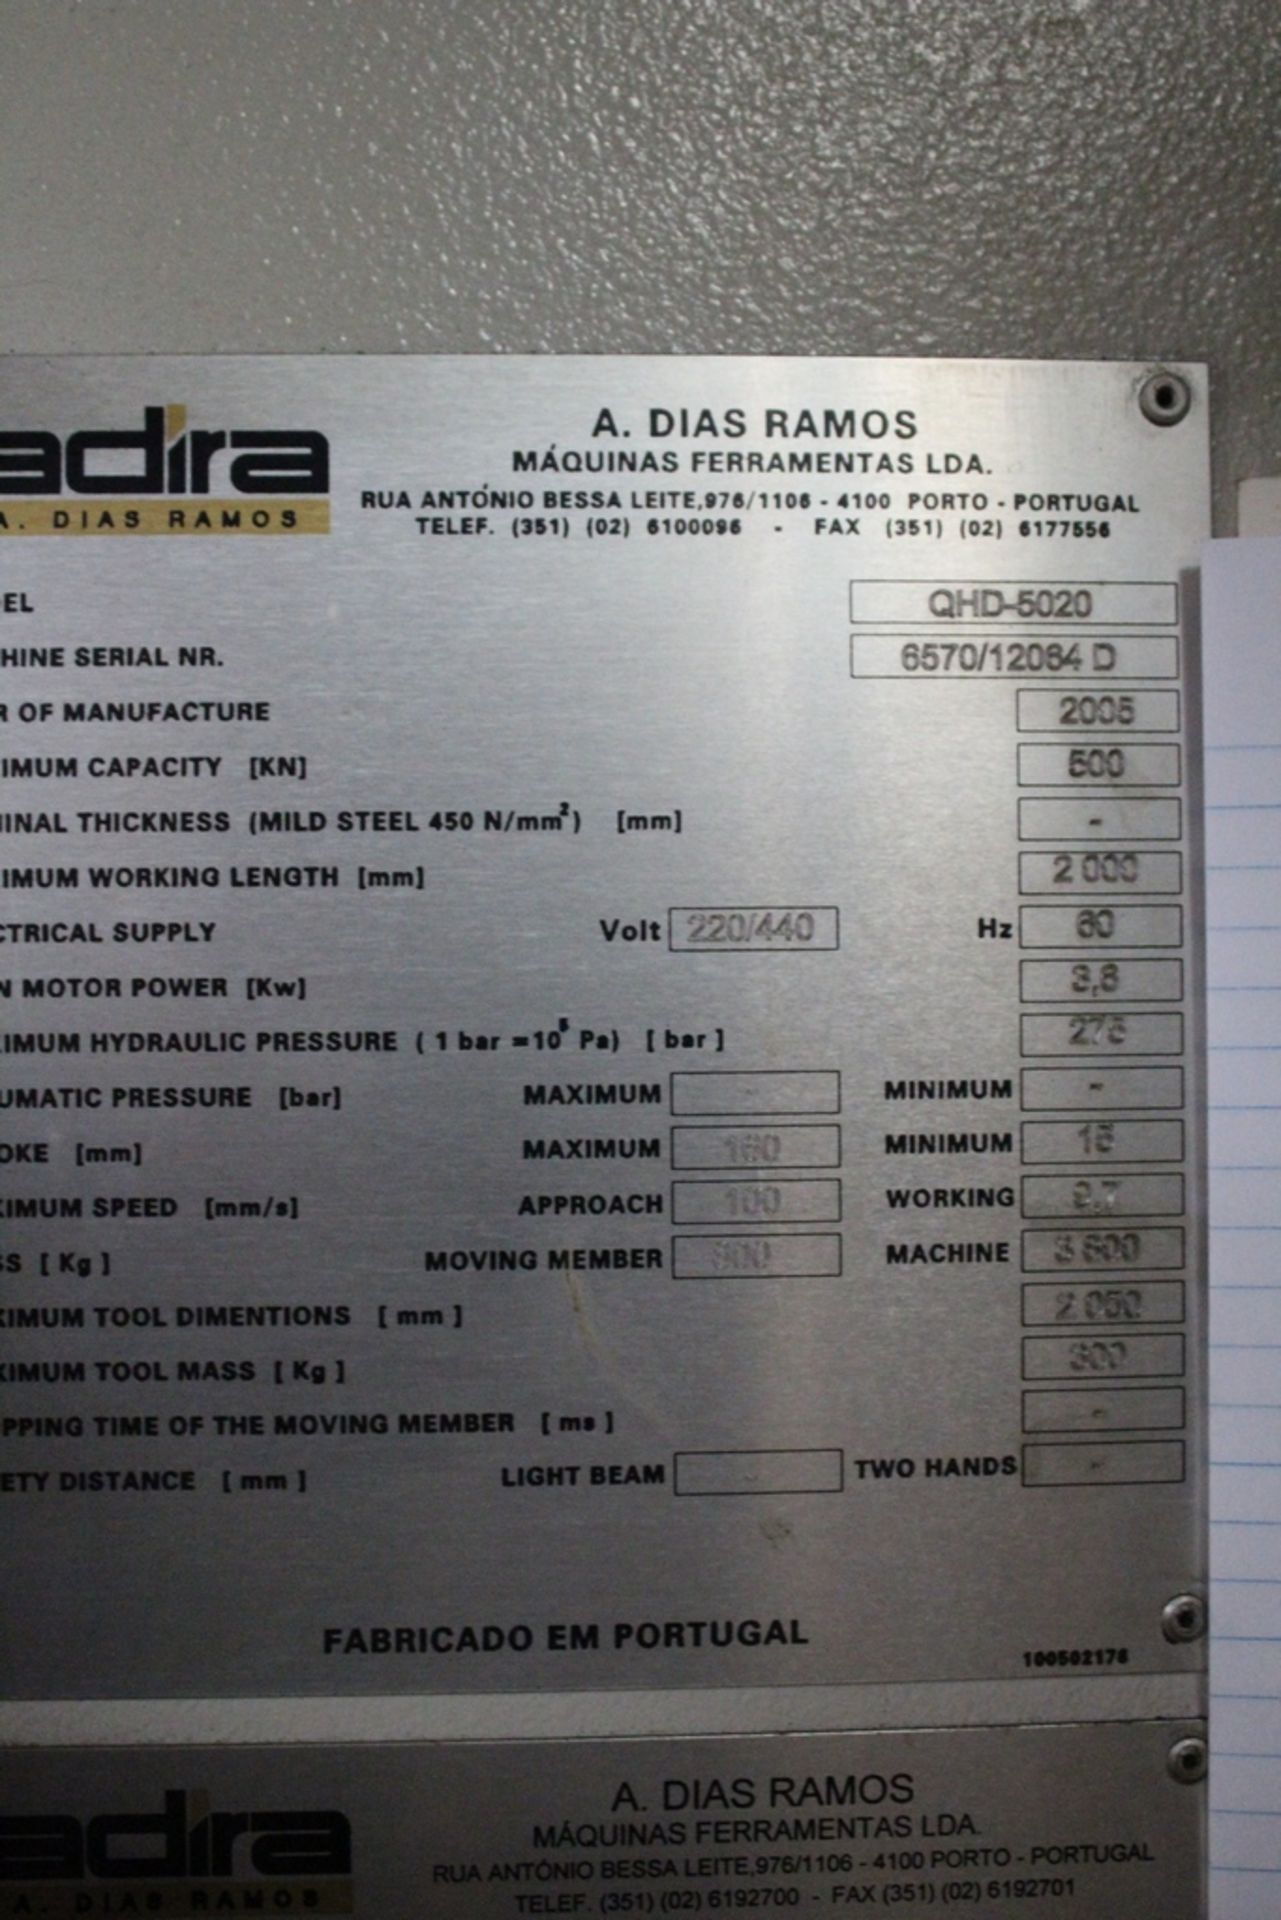 ADIRA MODEL QHD-5020 6' 6" 60 TON HYDRAULIC PRESS BRAKE S/N 6570-12064D (2005) WITH CYBELEC CNC - Image 3 of 4